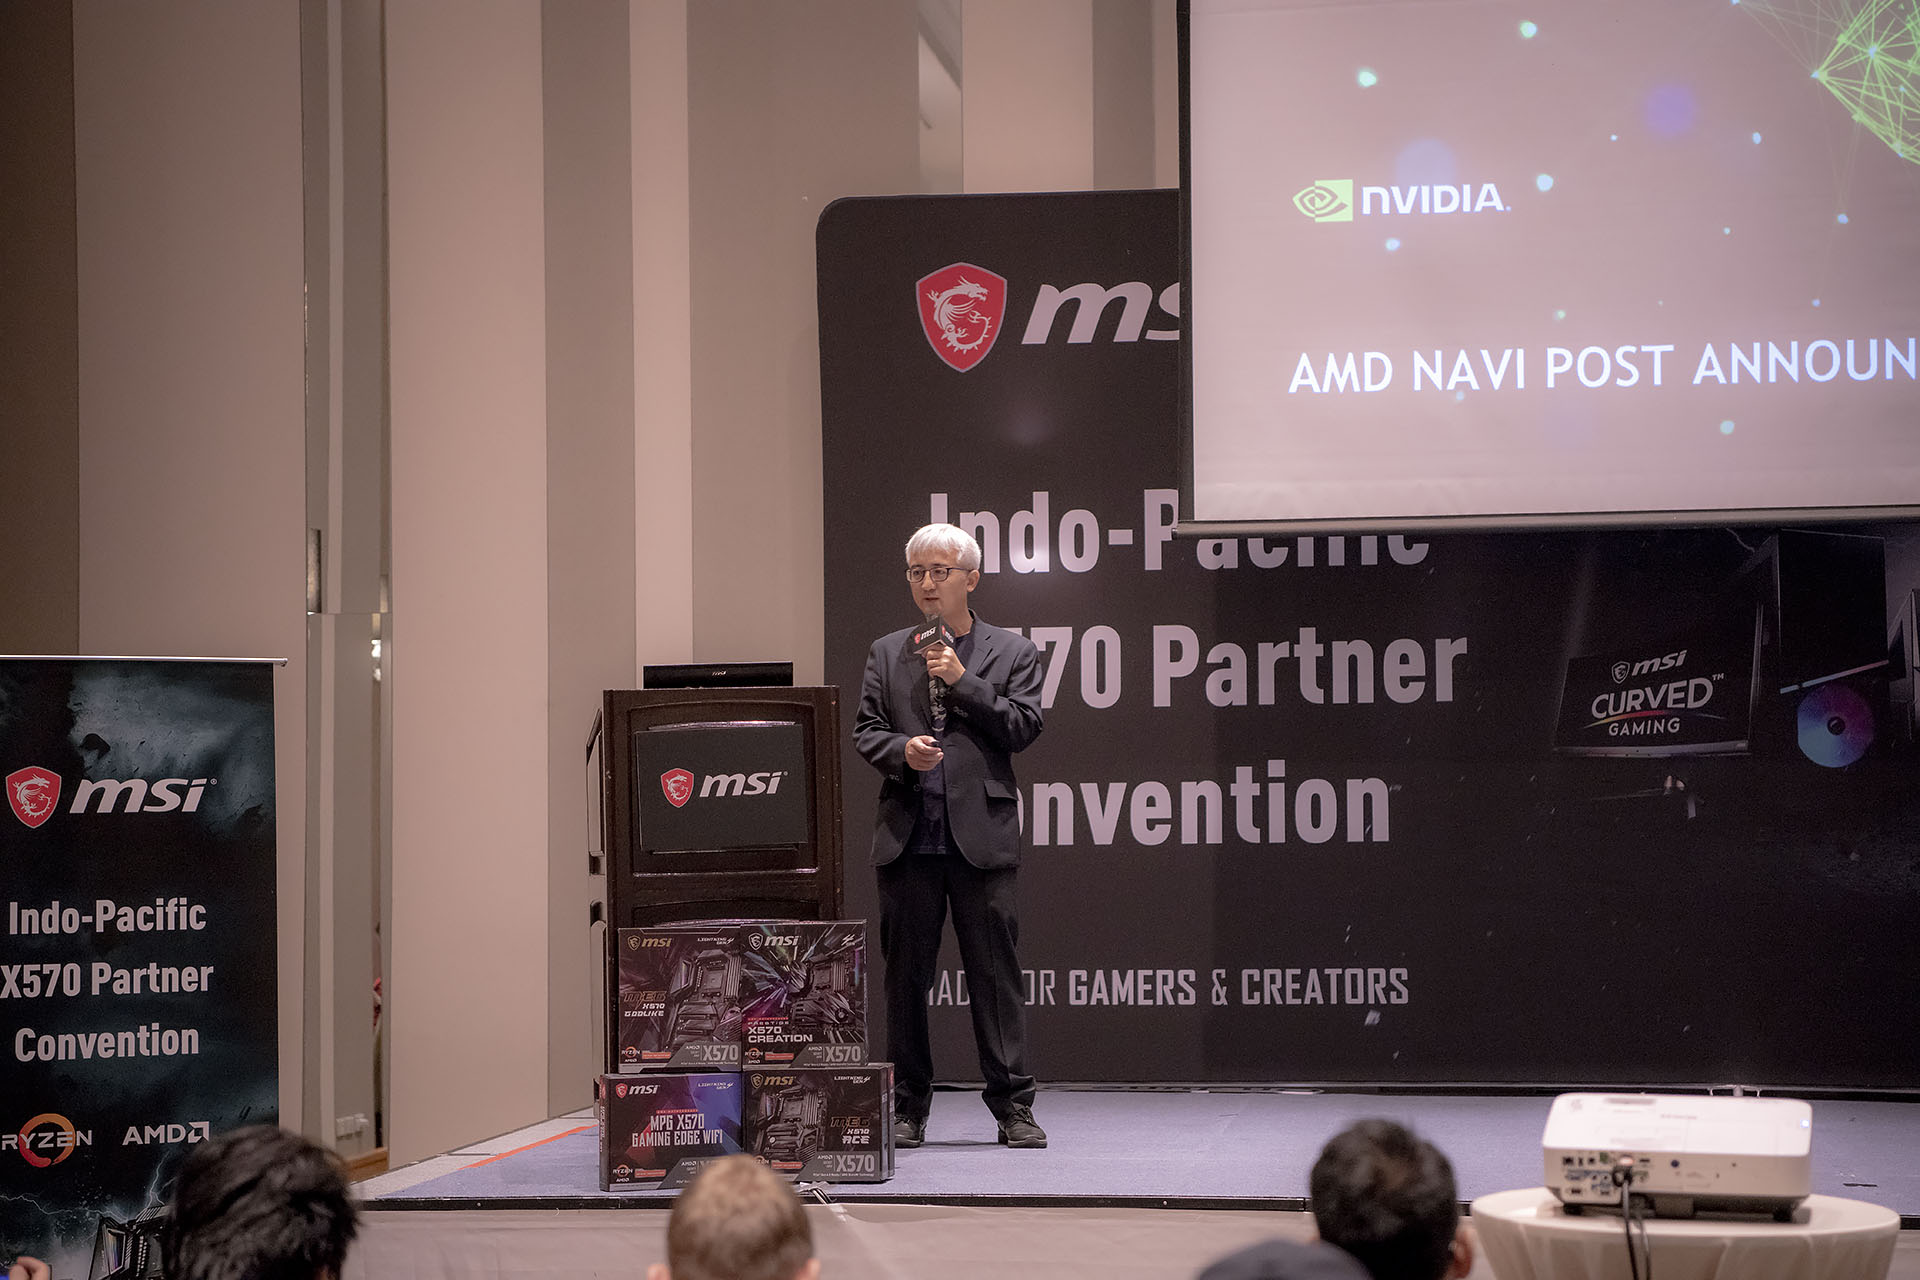 dsc 4845 บรรยากาศงาน MSI Indo Pacific X570 Partner Convention พบการเปิดตัวเมนบอร์ด X570 รุ่นใหม่ล่าสุดจากทาง MSI ต้อนรับการมาของซีพียู AMD RYZEN 3000ซีรี่ย์ 